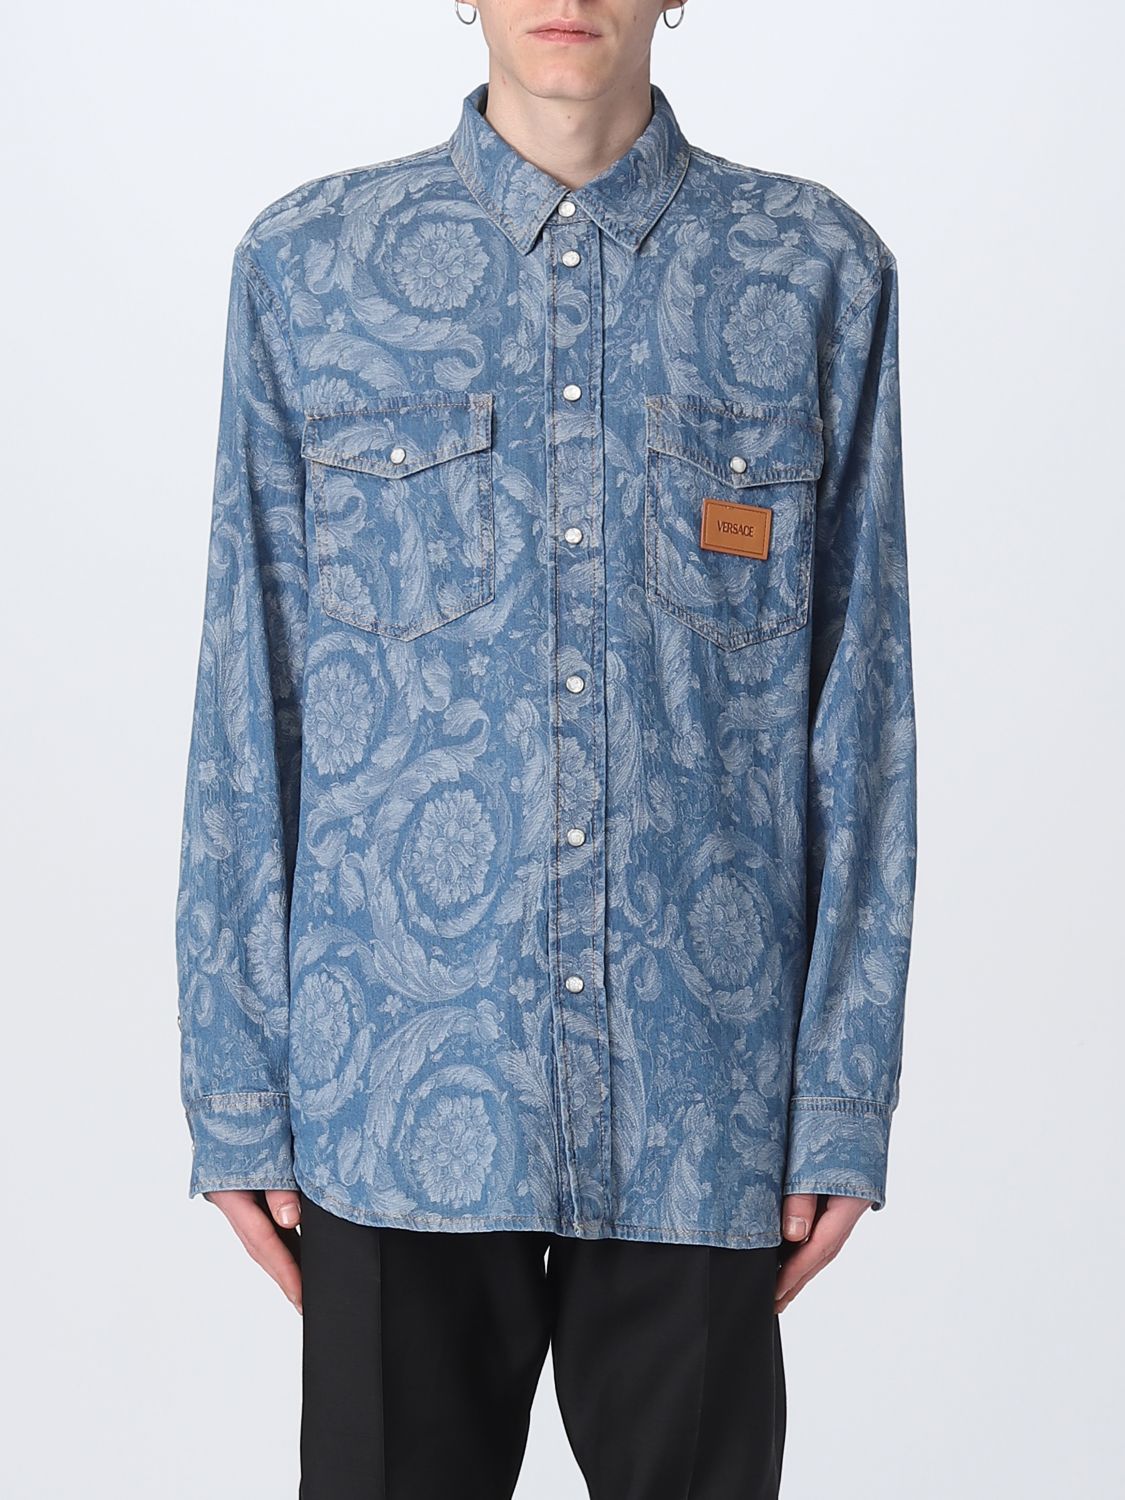 Avonturier naar voren gebracht formaat VERSACE: shirt for man - Blue | Versace shirt 10086081A05765 online on  GIGLIO.COM